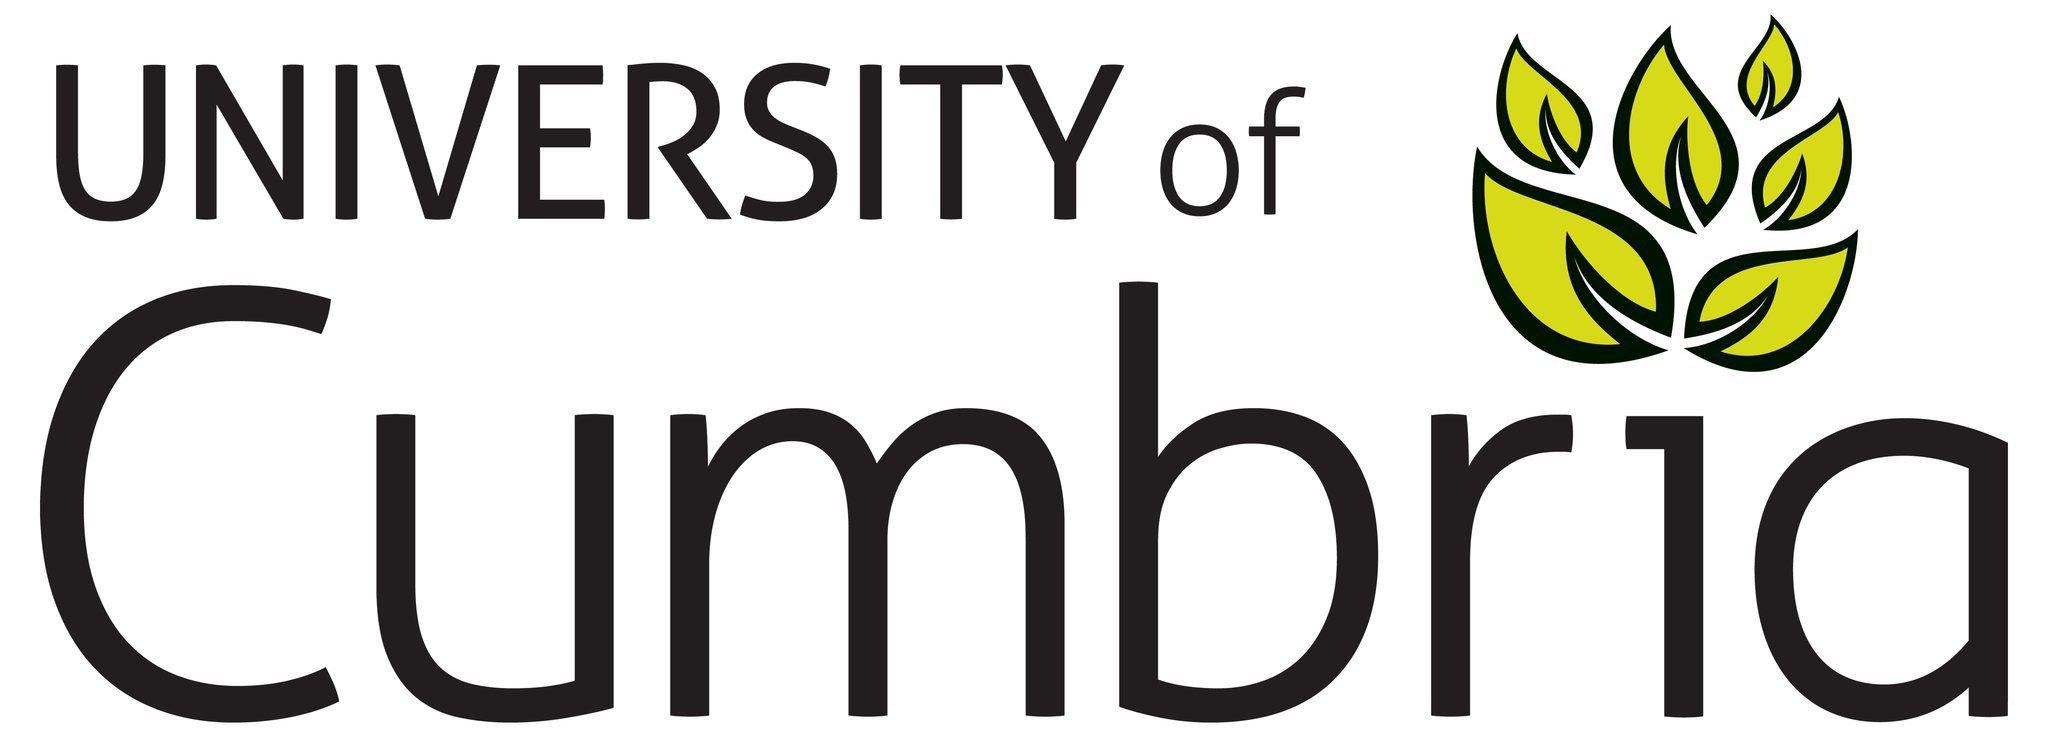 University of Cumbria - myday